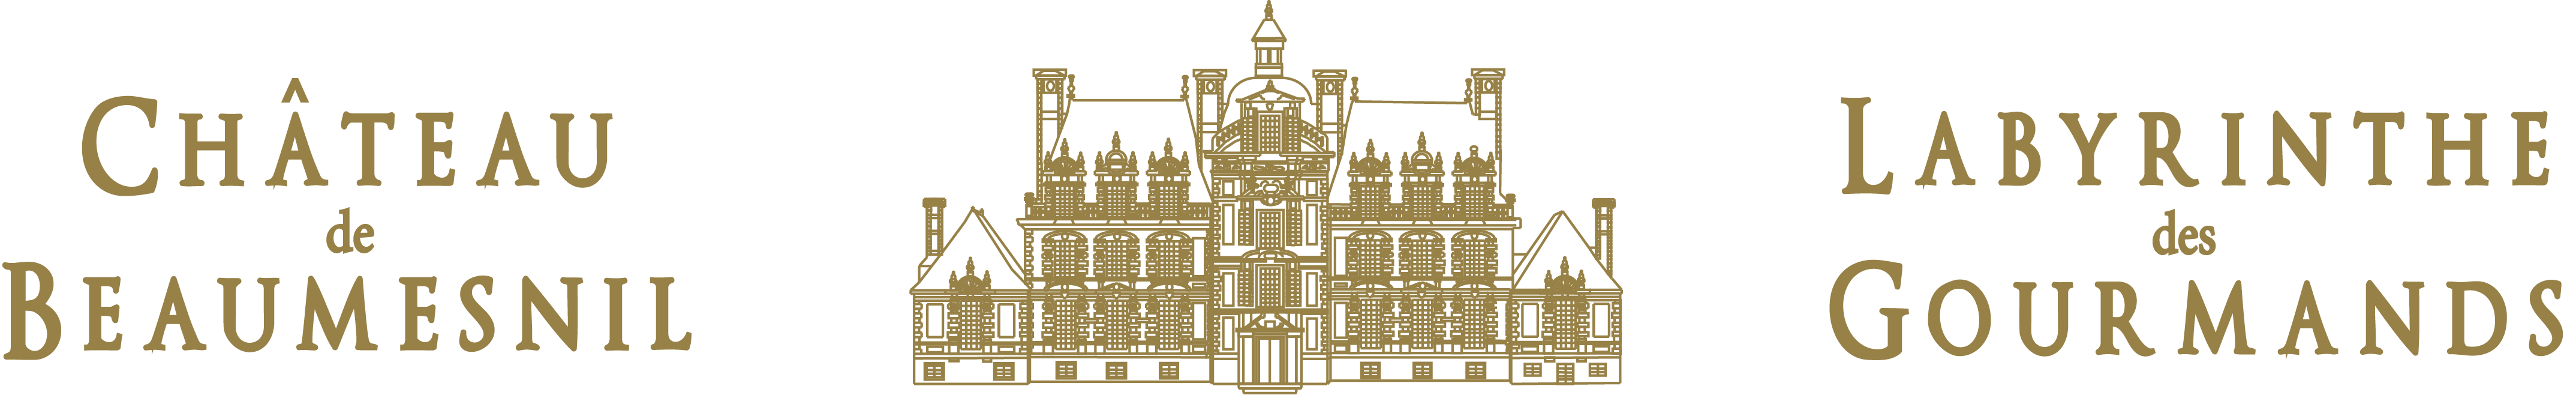 Logo Chateau de Beaumesnil